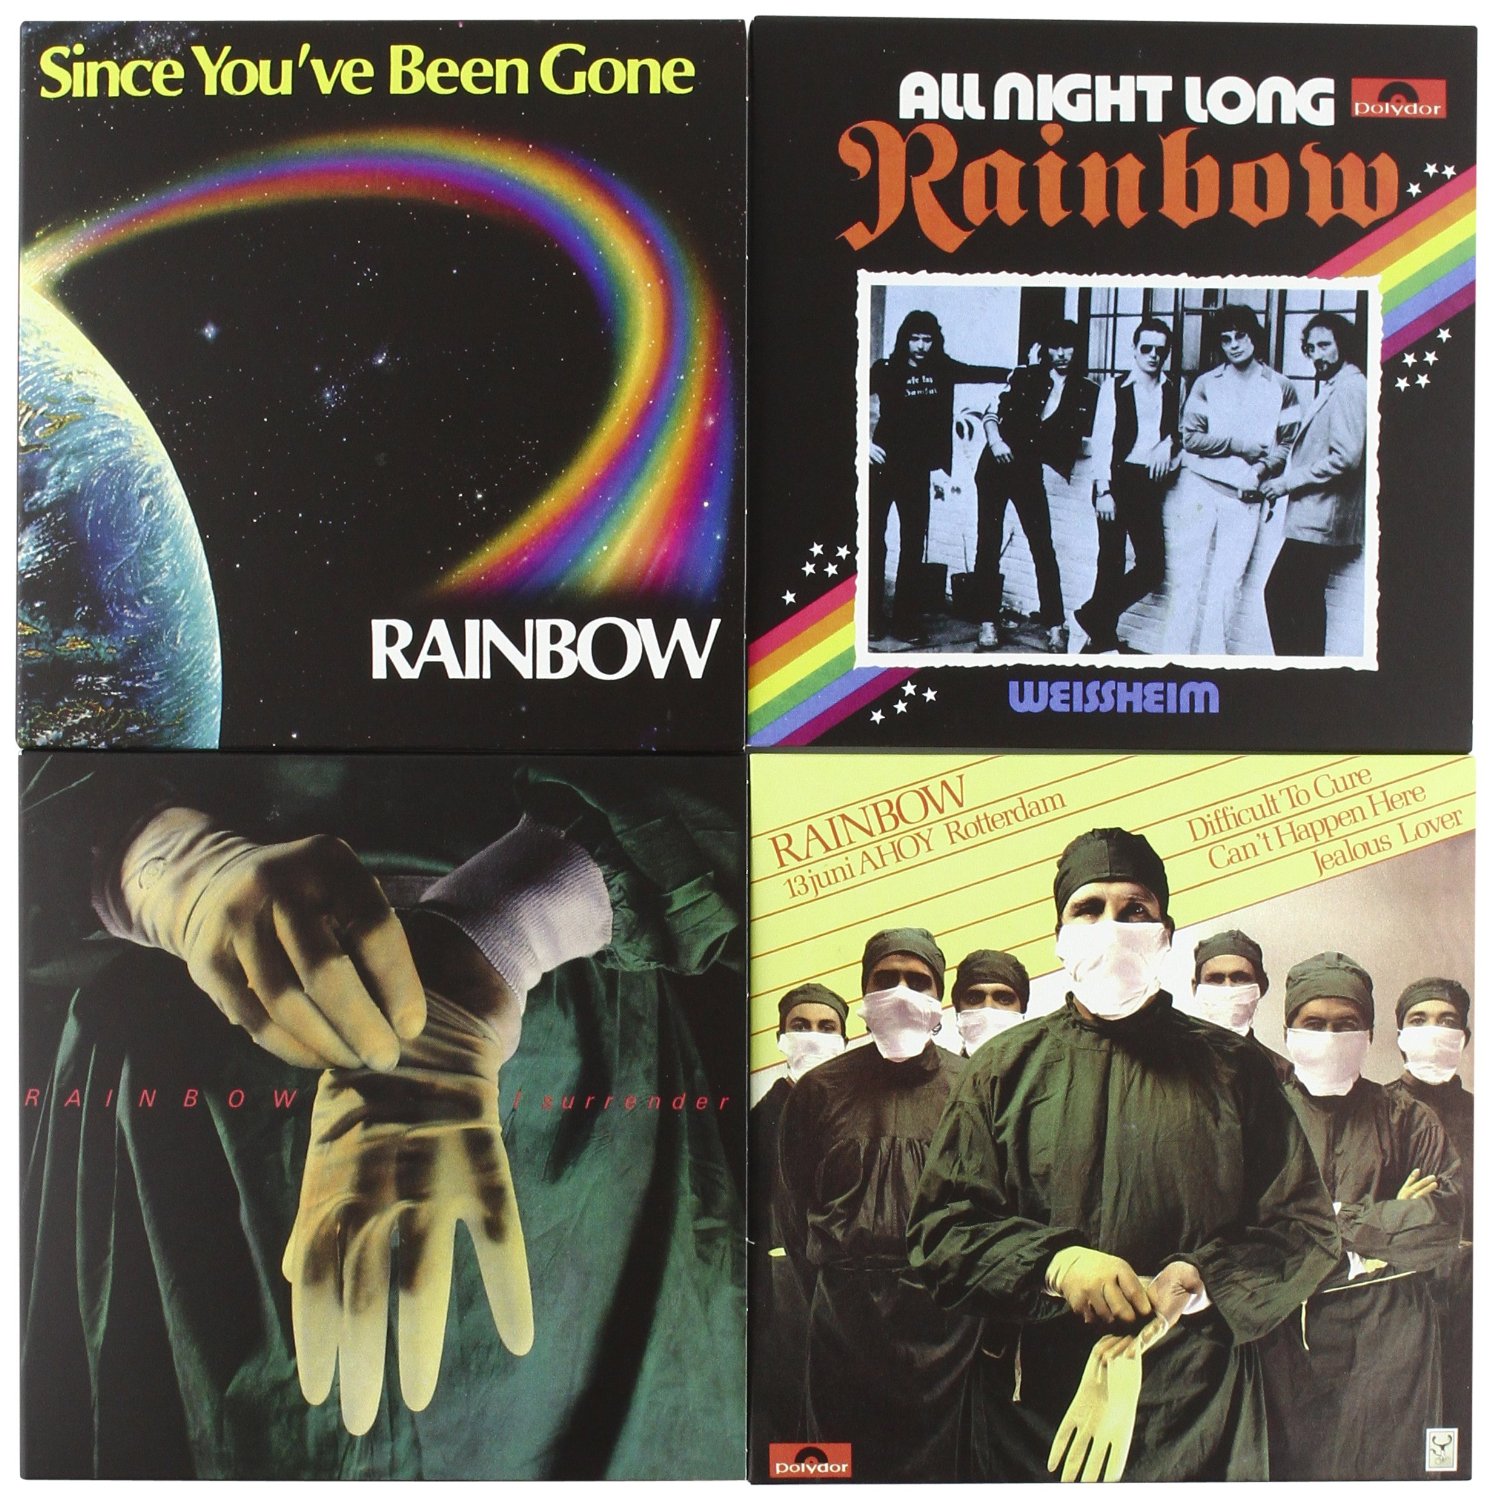 rainbow the singles box set | Metal Odyssey > Heavy Metal Music Blog